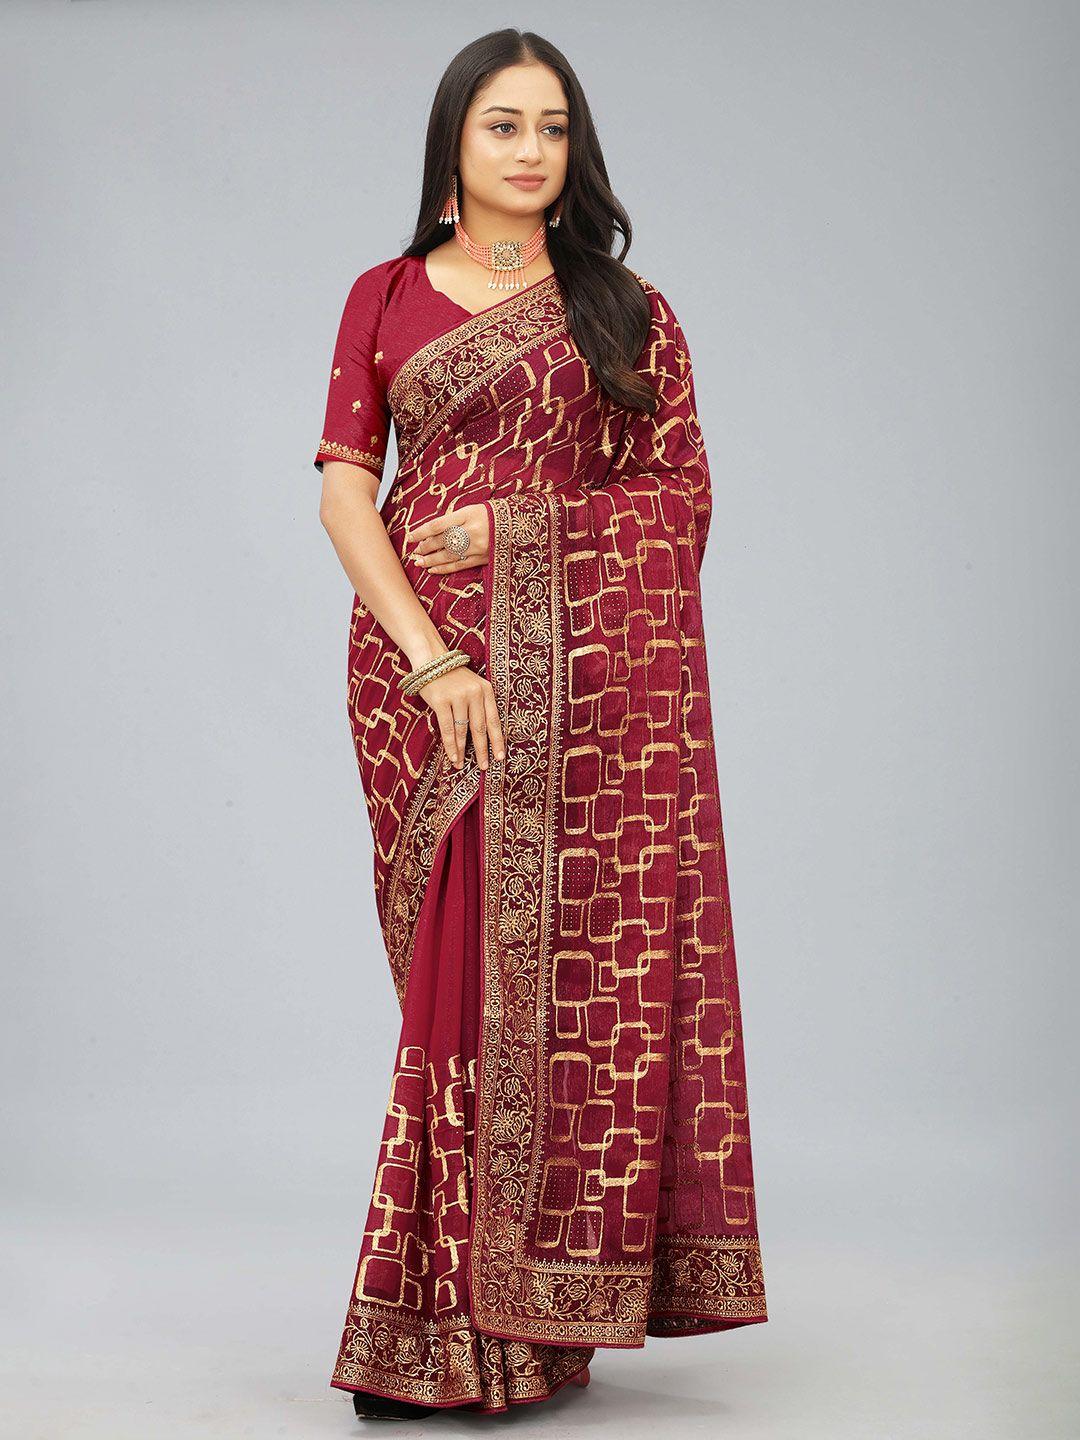 hinaya geometric embroidered embellished beads and stones saree